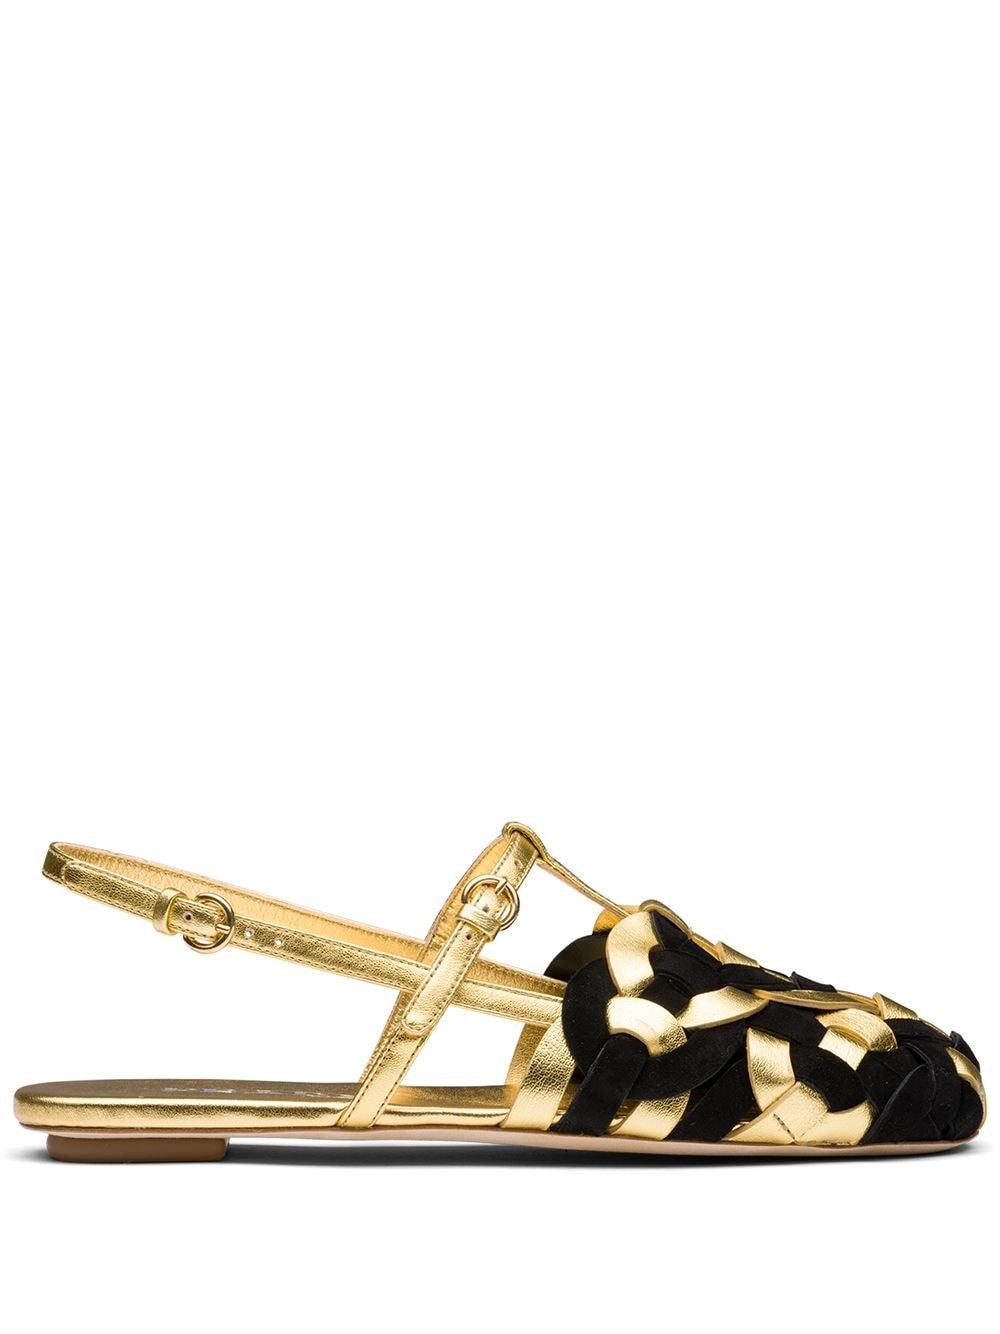 Prada Suede Woven Motif Flat Sandals in Gold (Metallic) | Lyst